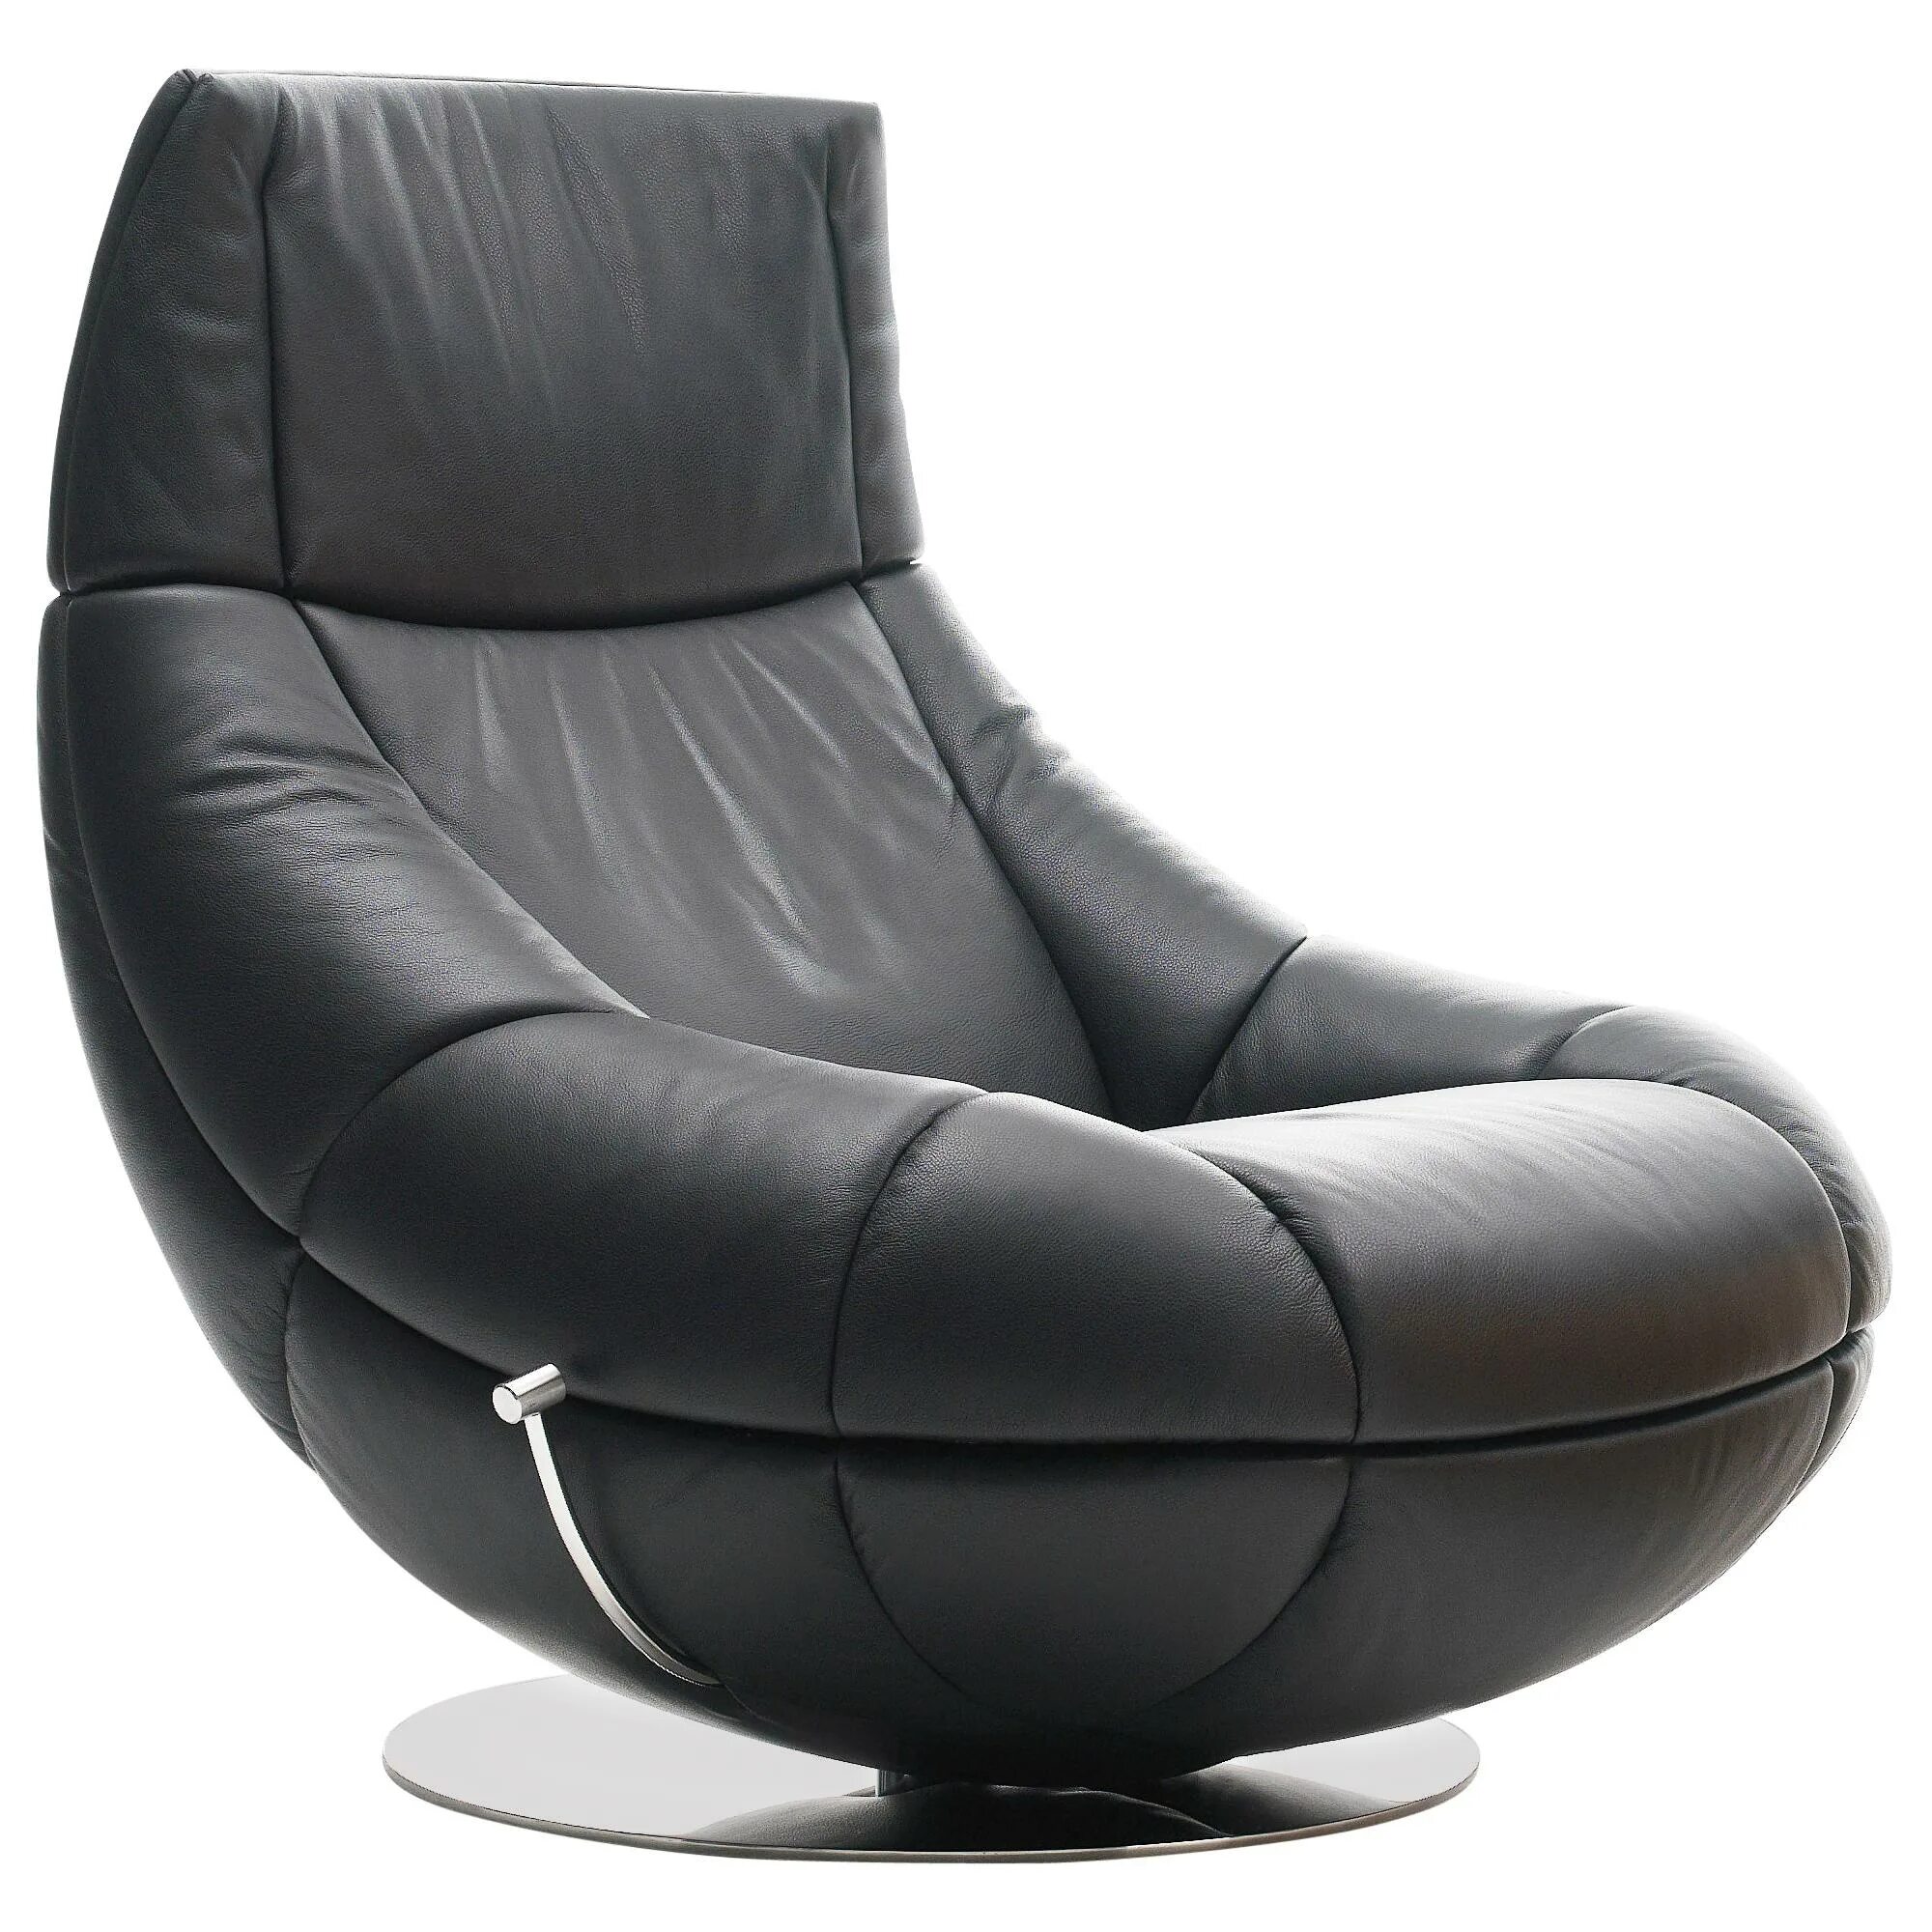 Кресло placentero Lounge. Де седе кресло. 6202с oragne кресло. Кресло кожаное Furniture 9589 Black.